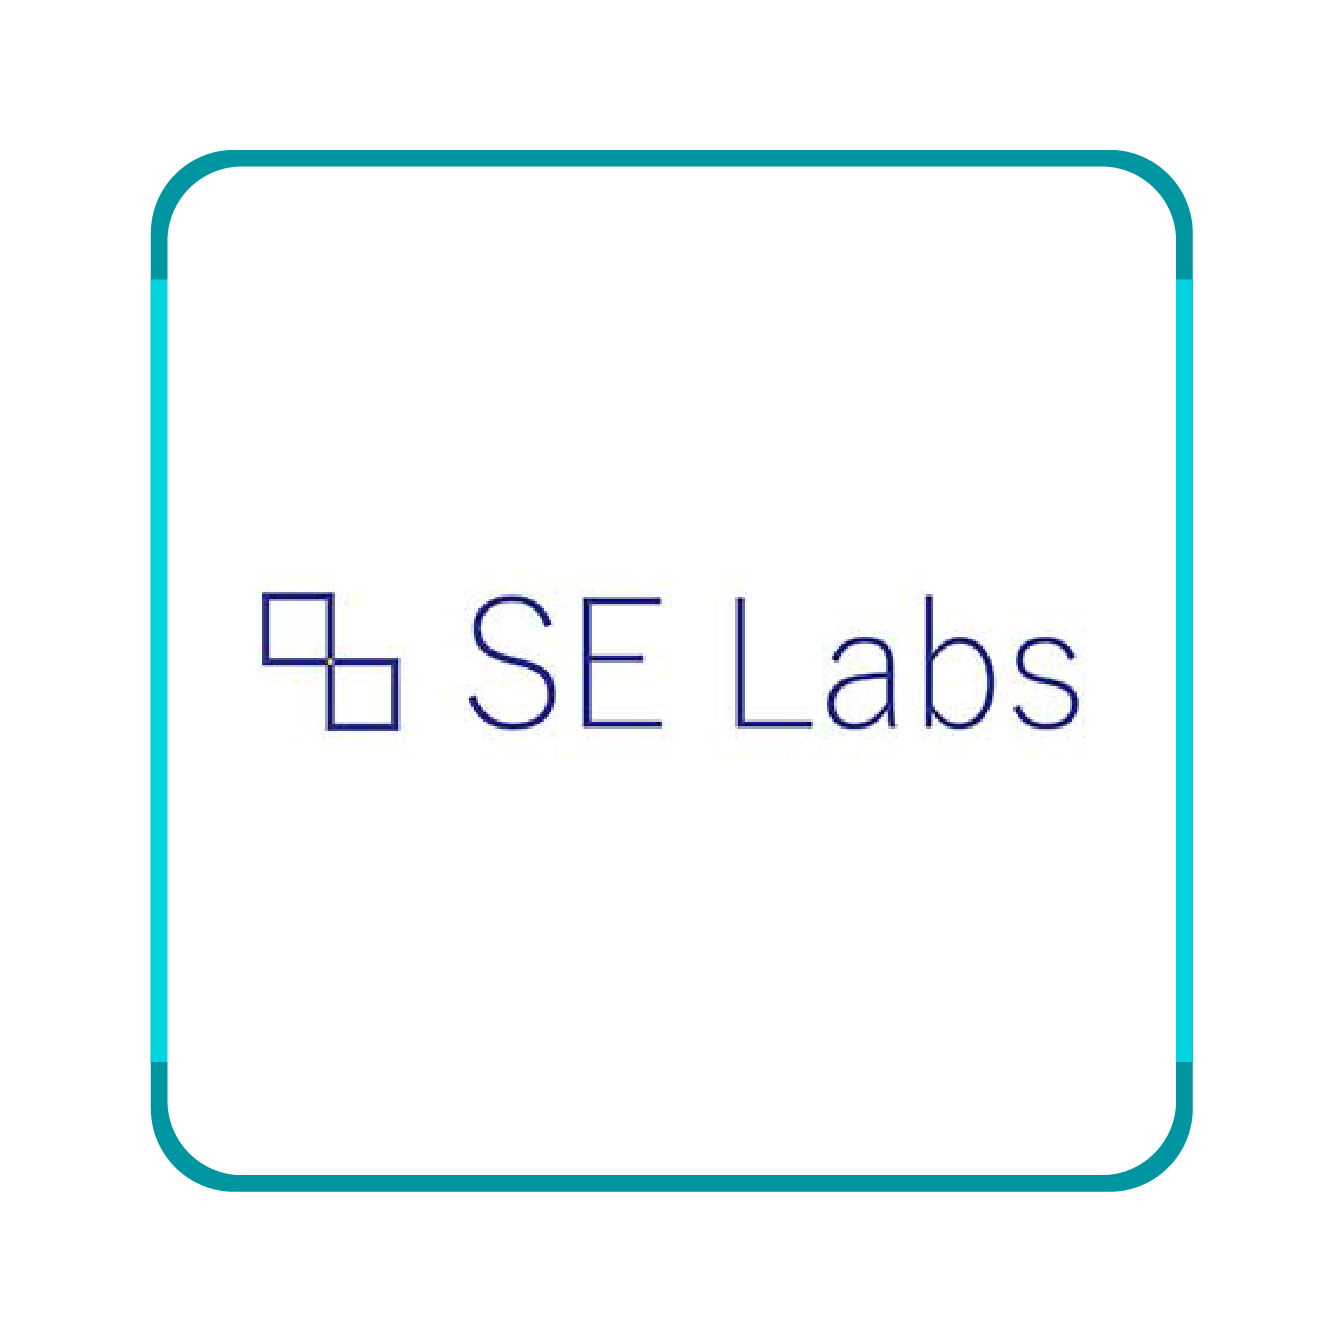 SE Labs logo